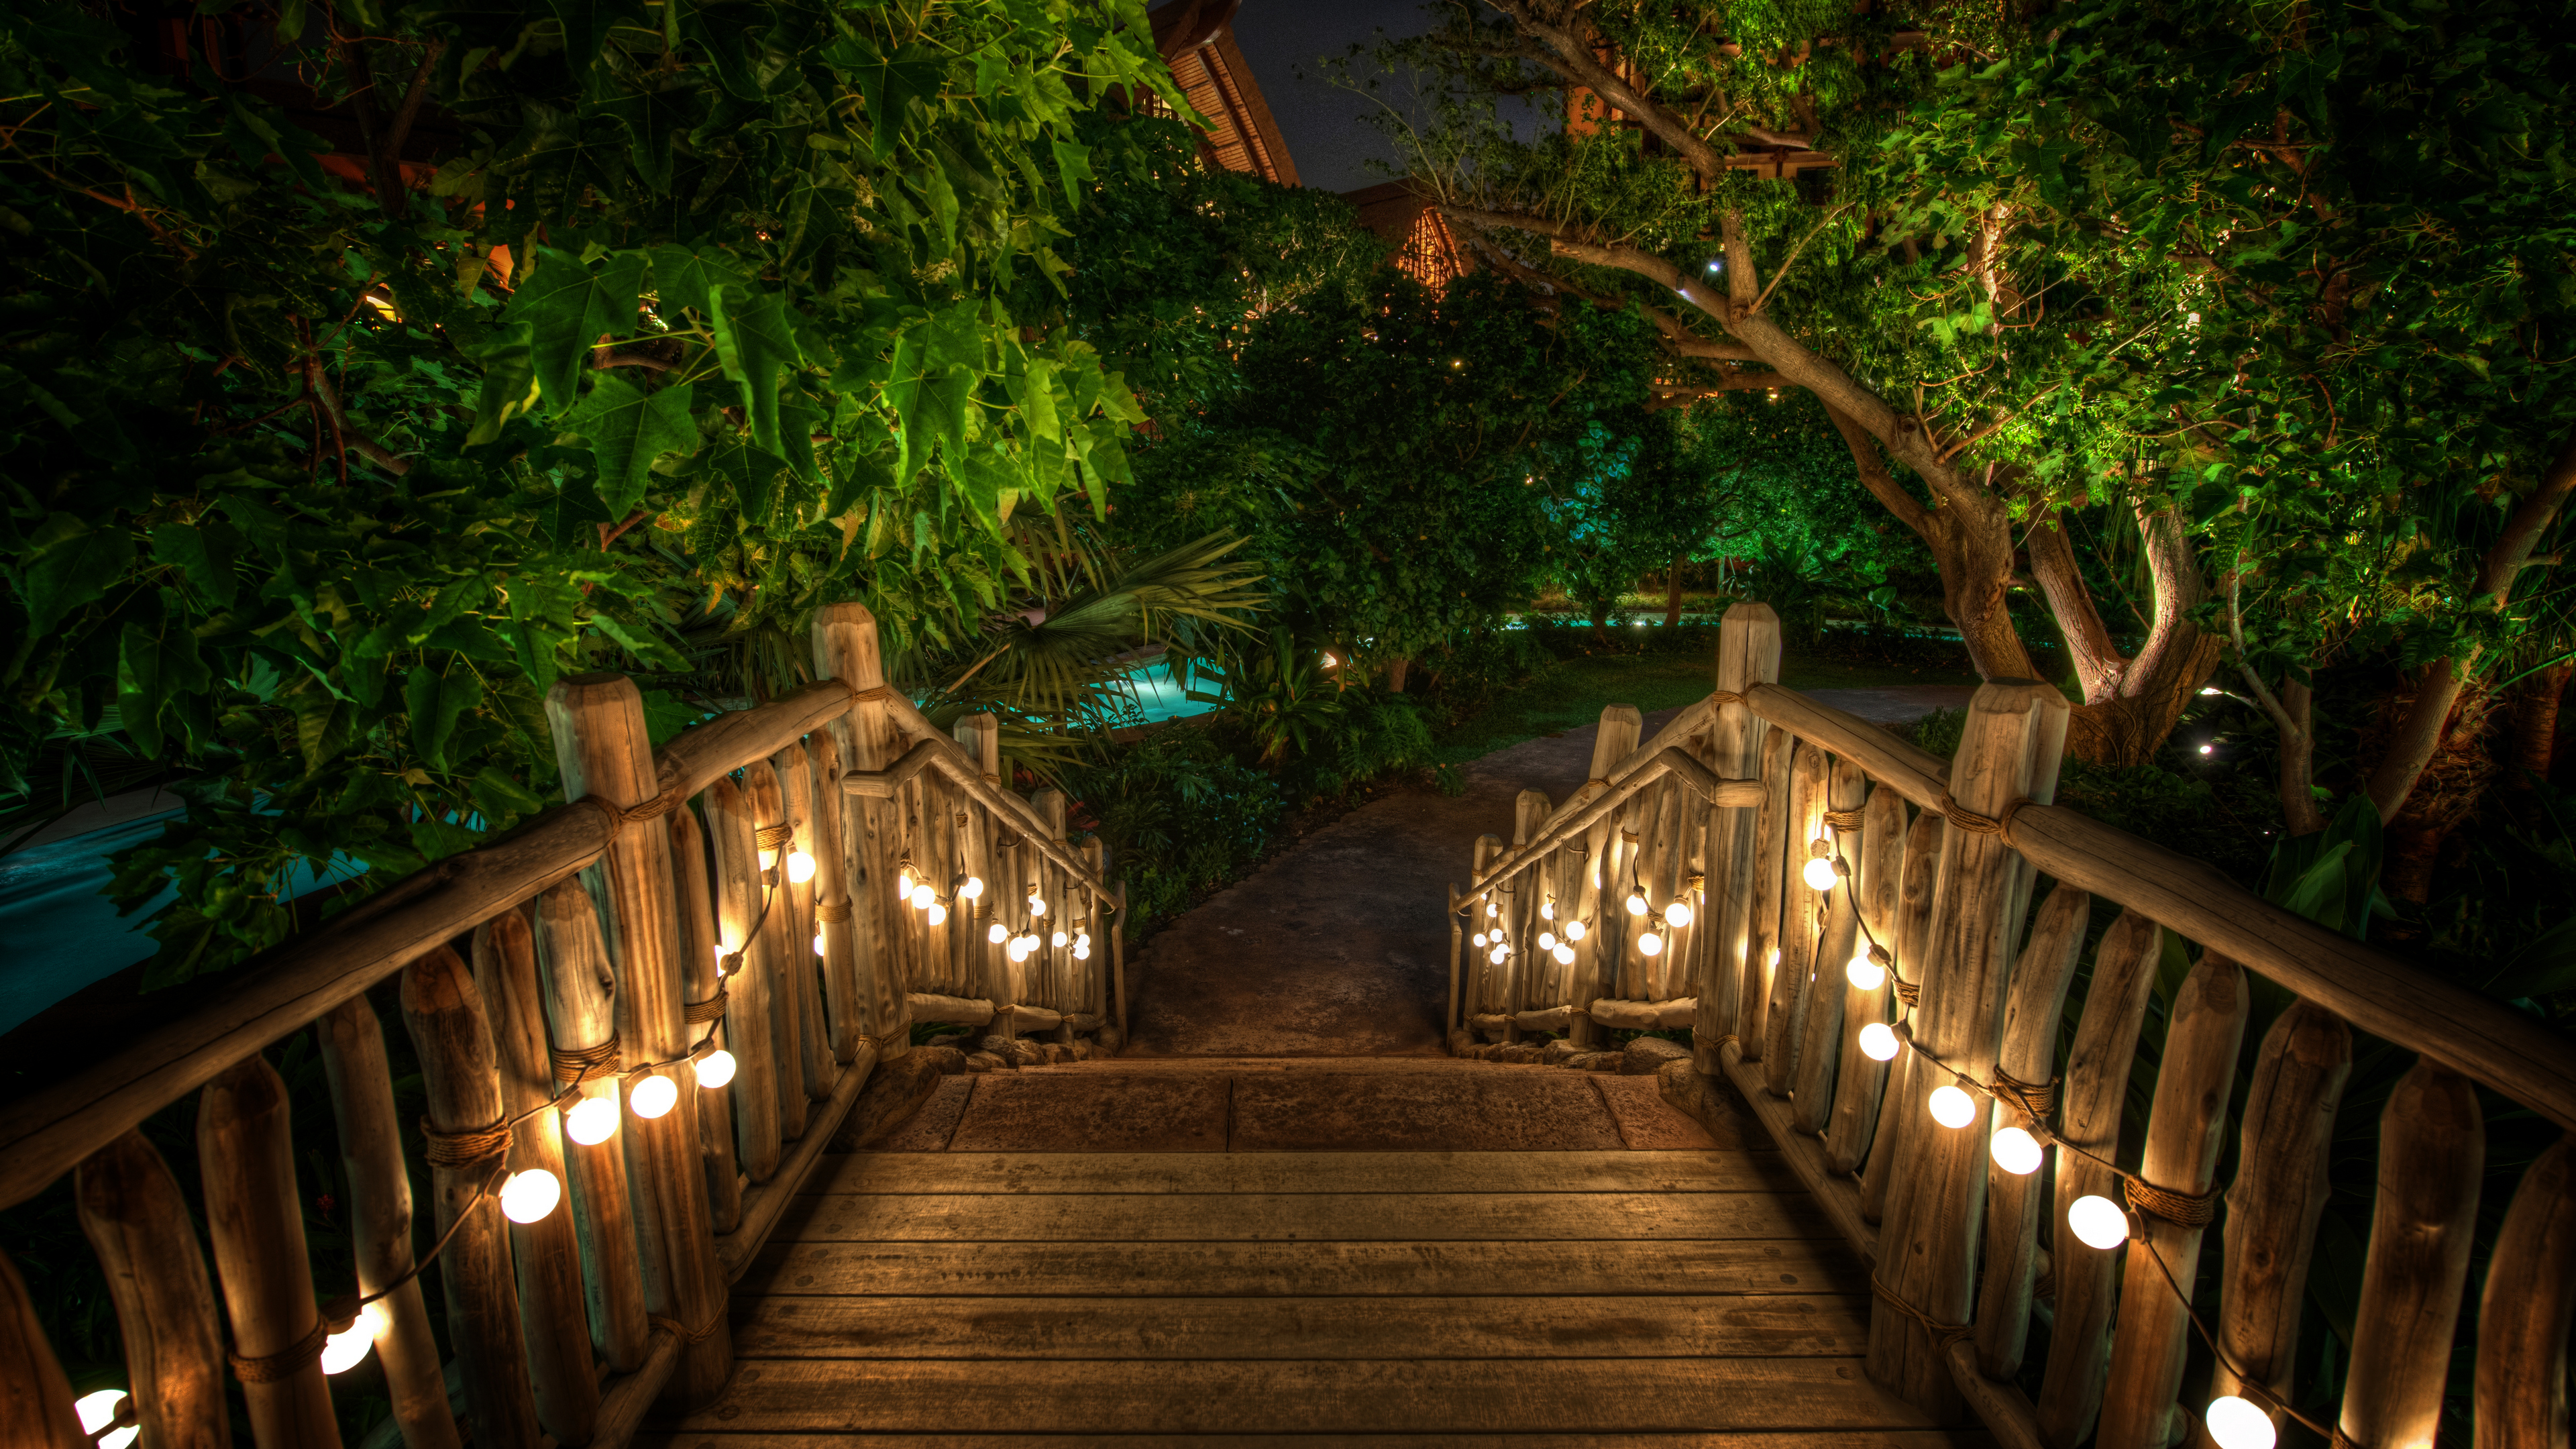 Trey Ratcliff Photography Landscape Path Resort Night Lights Garden Trees Bridge Hawaii Oahu 3840x2160